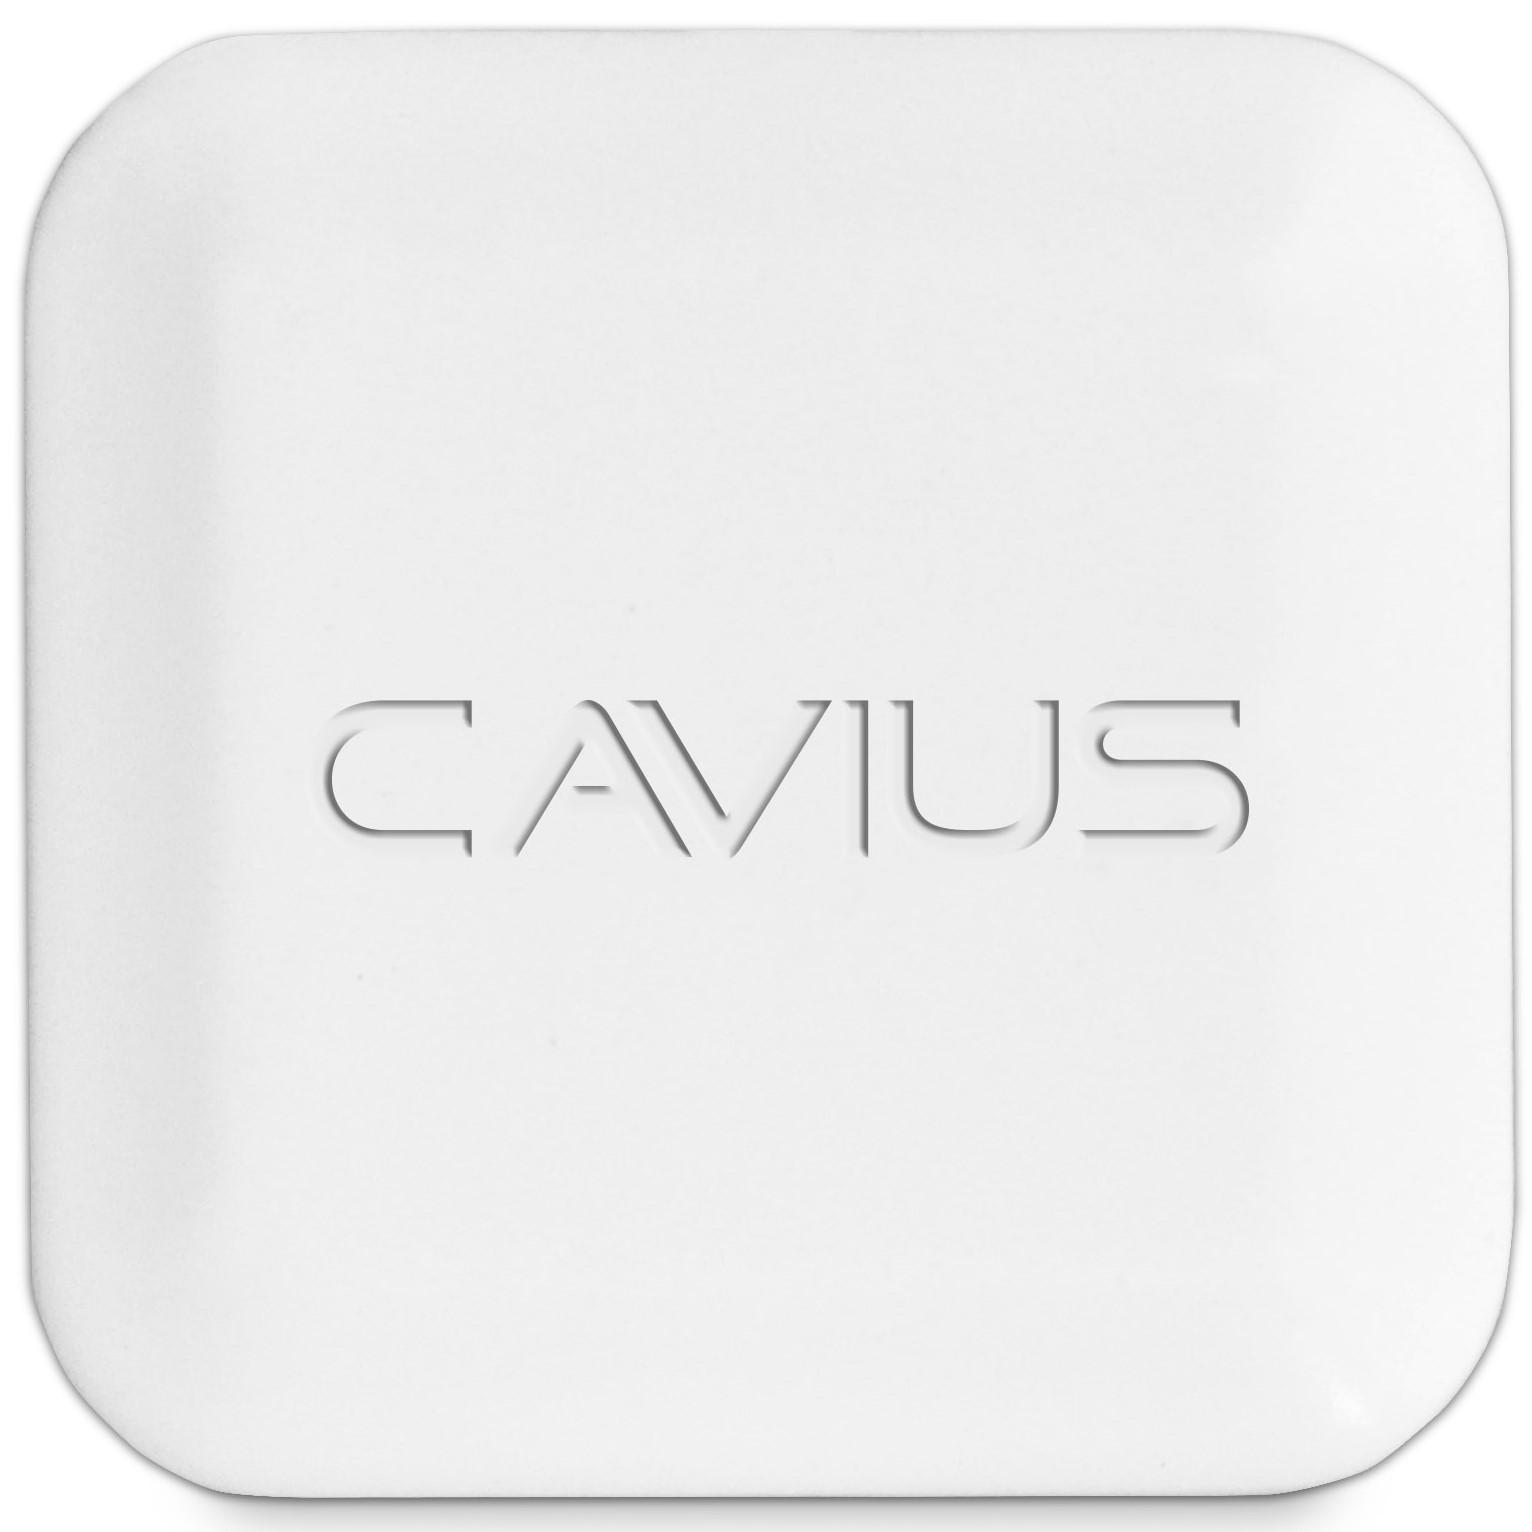 Rookmelder Smart Home Hub - Cavius